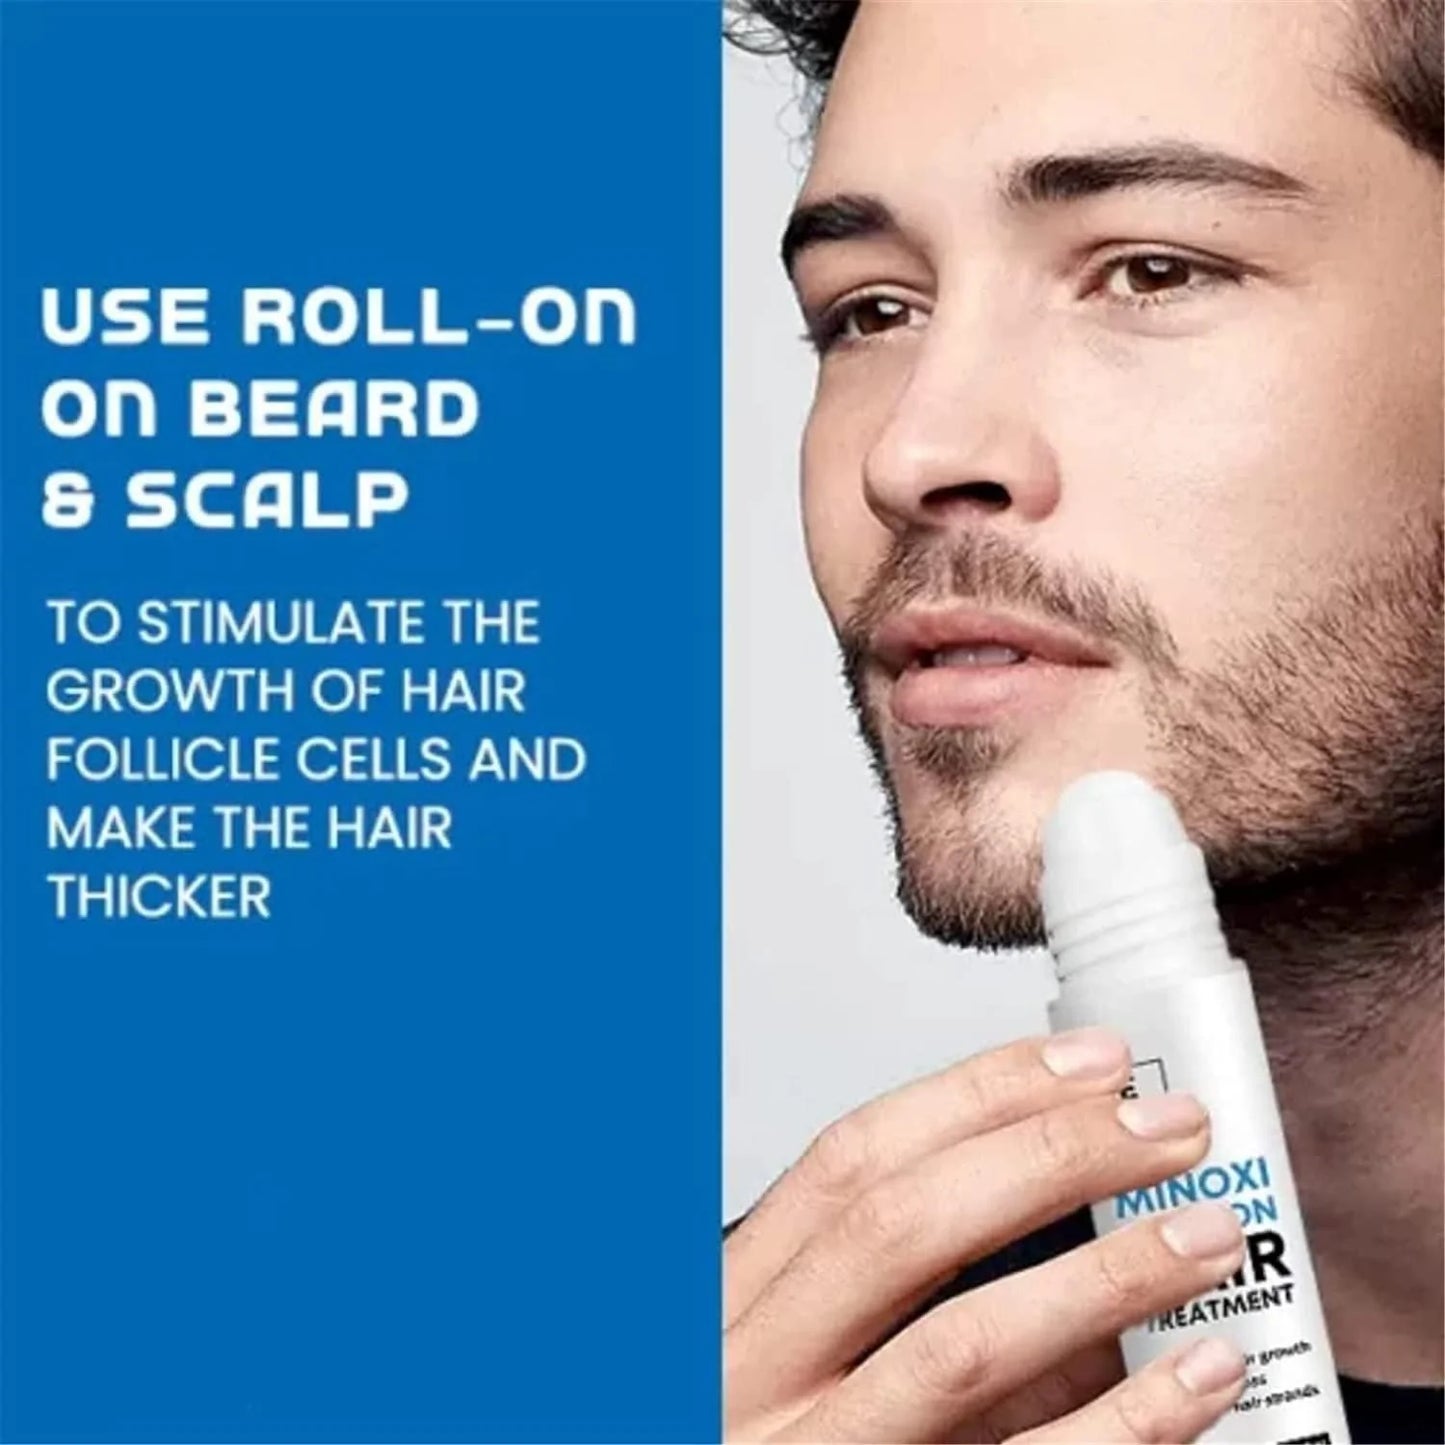 Minoxi Roll-On Hair Growth Serum